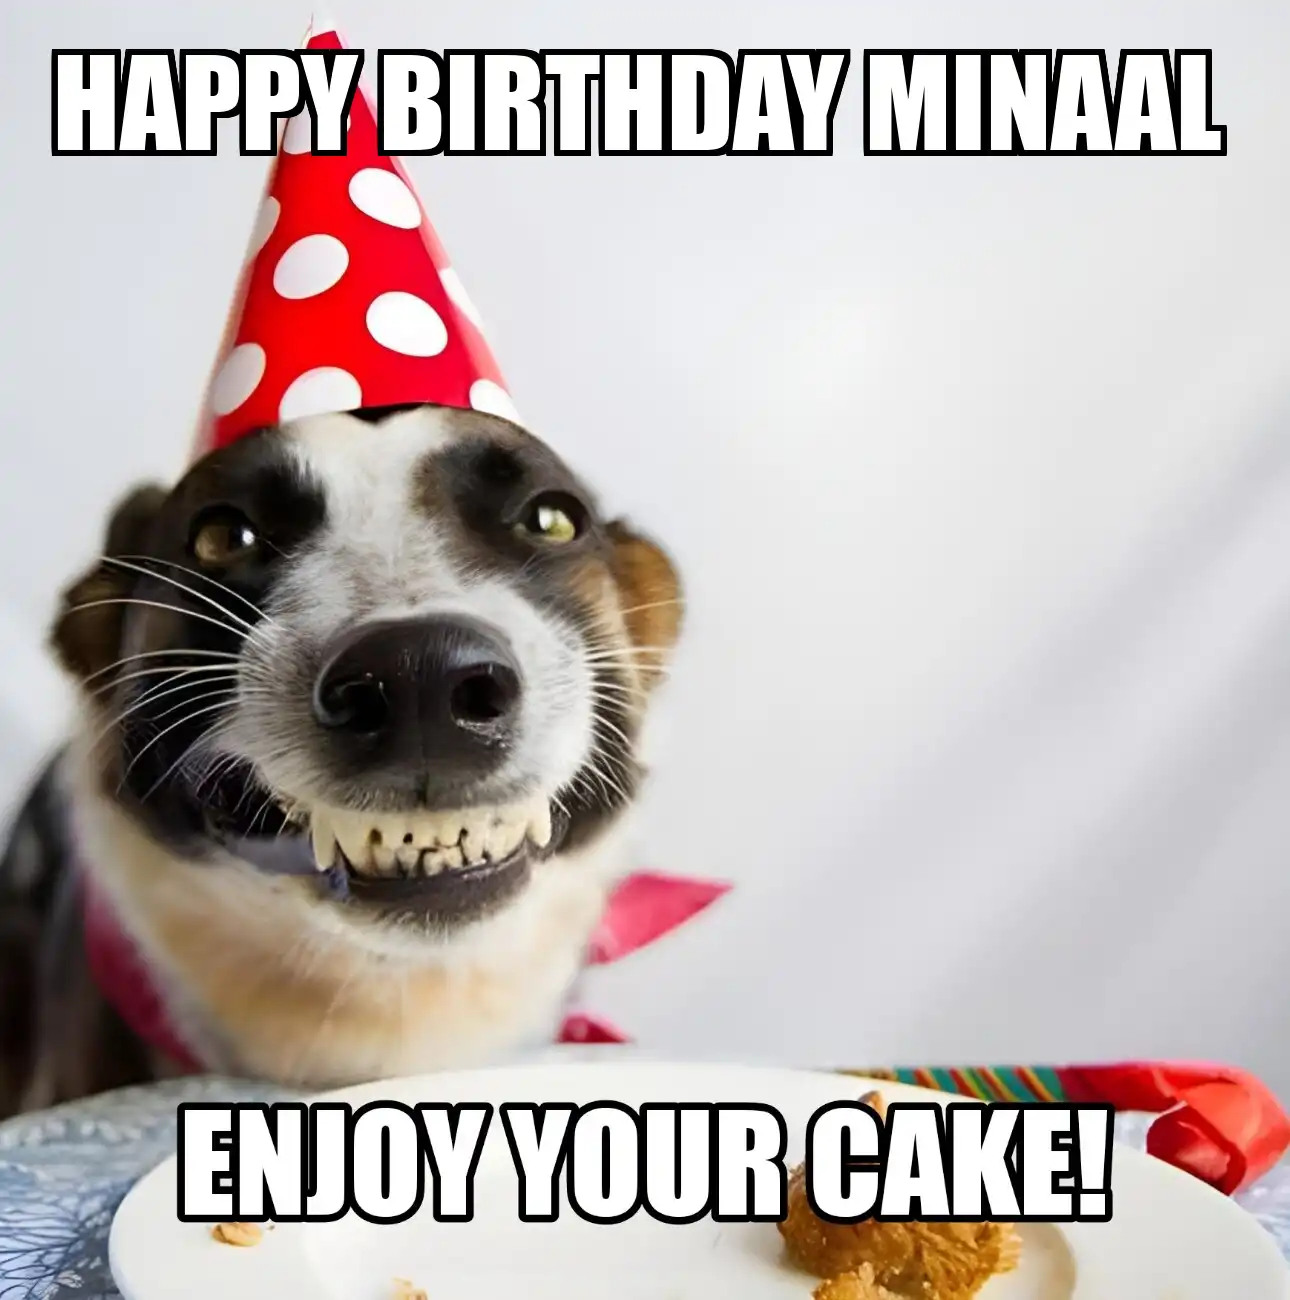 Happy Birthday Minaal Enjoy Your Cake Dog Meme